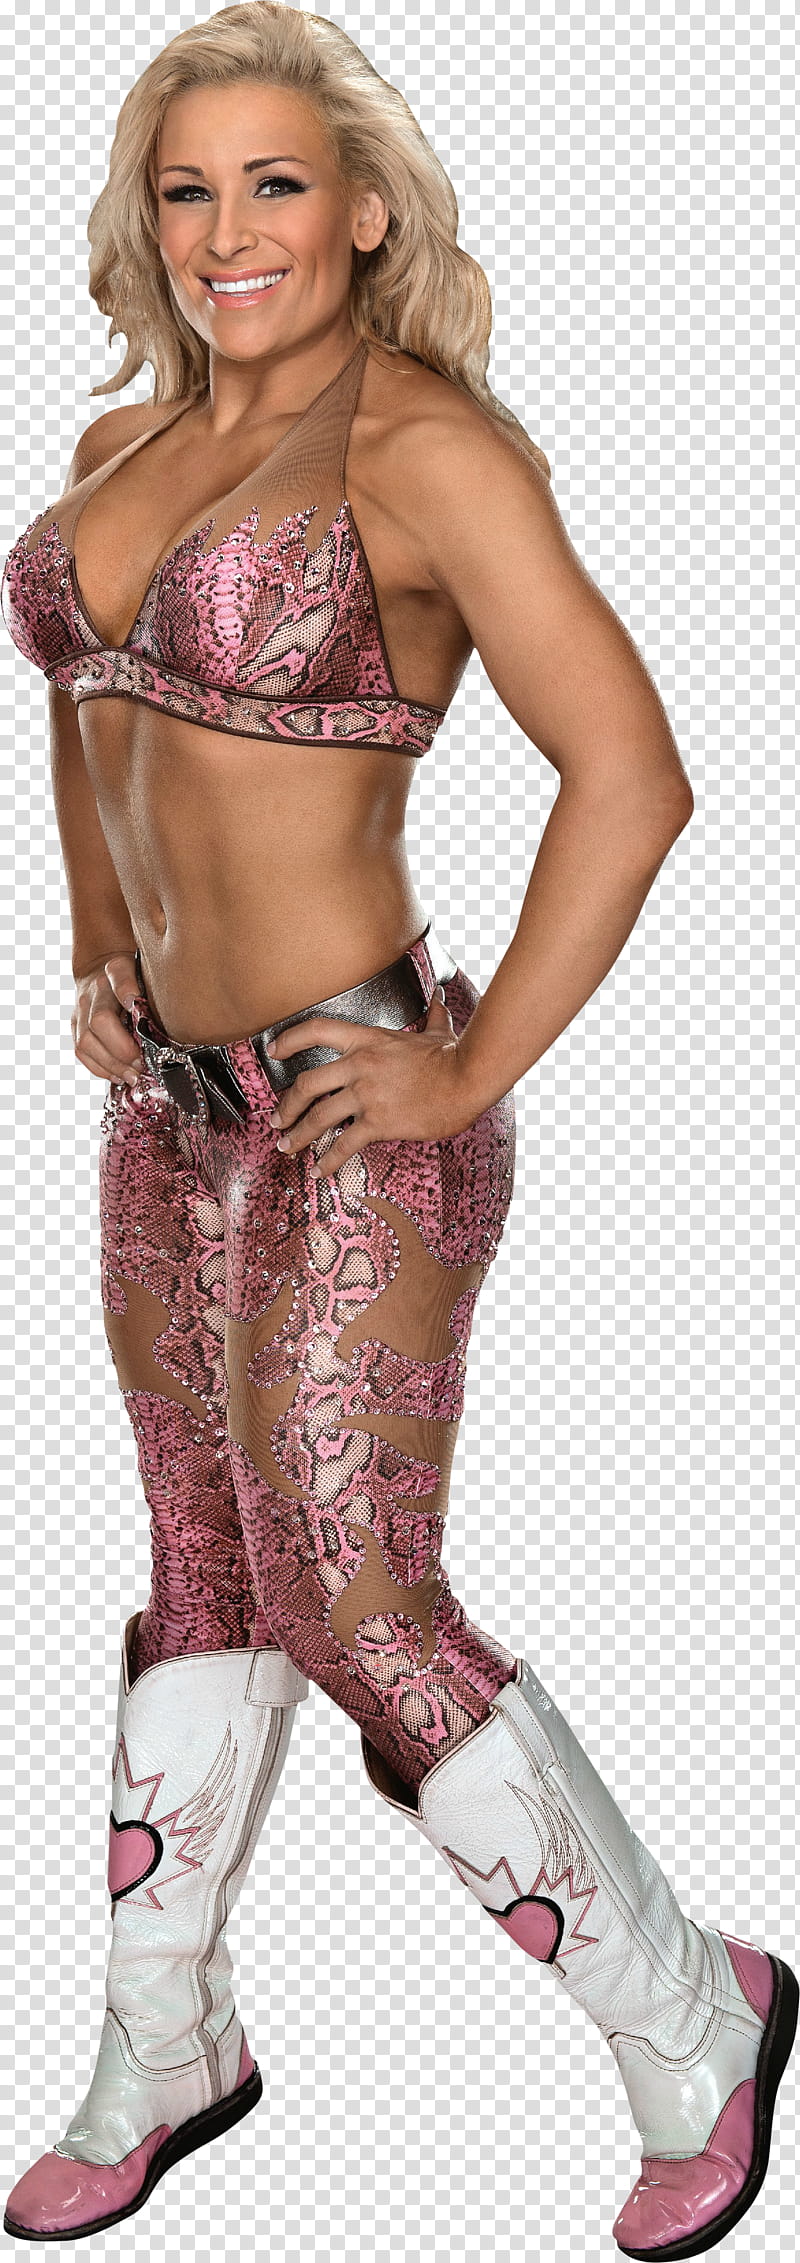 WWE Diva Natalya transparent background PNG clipart